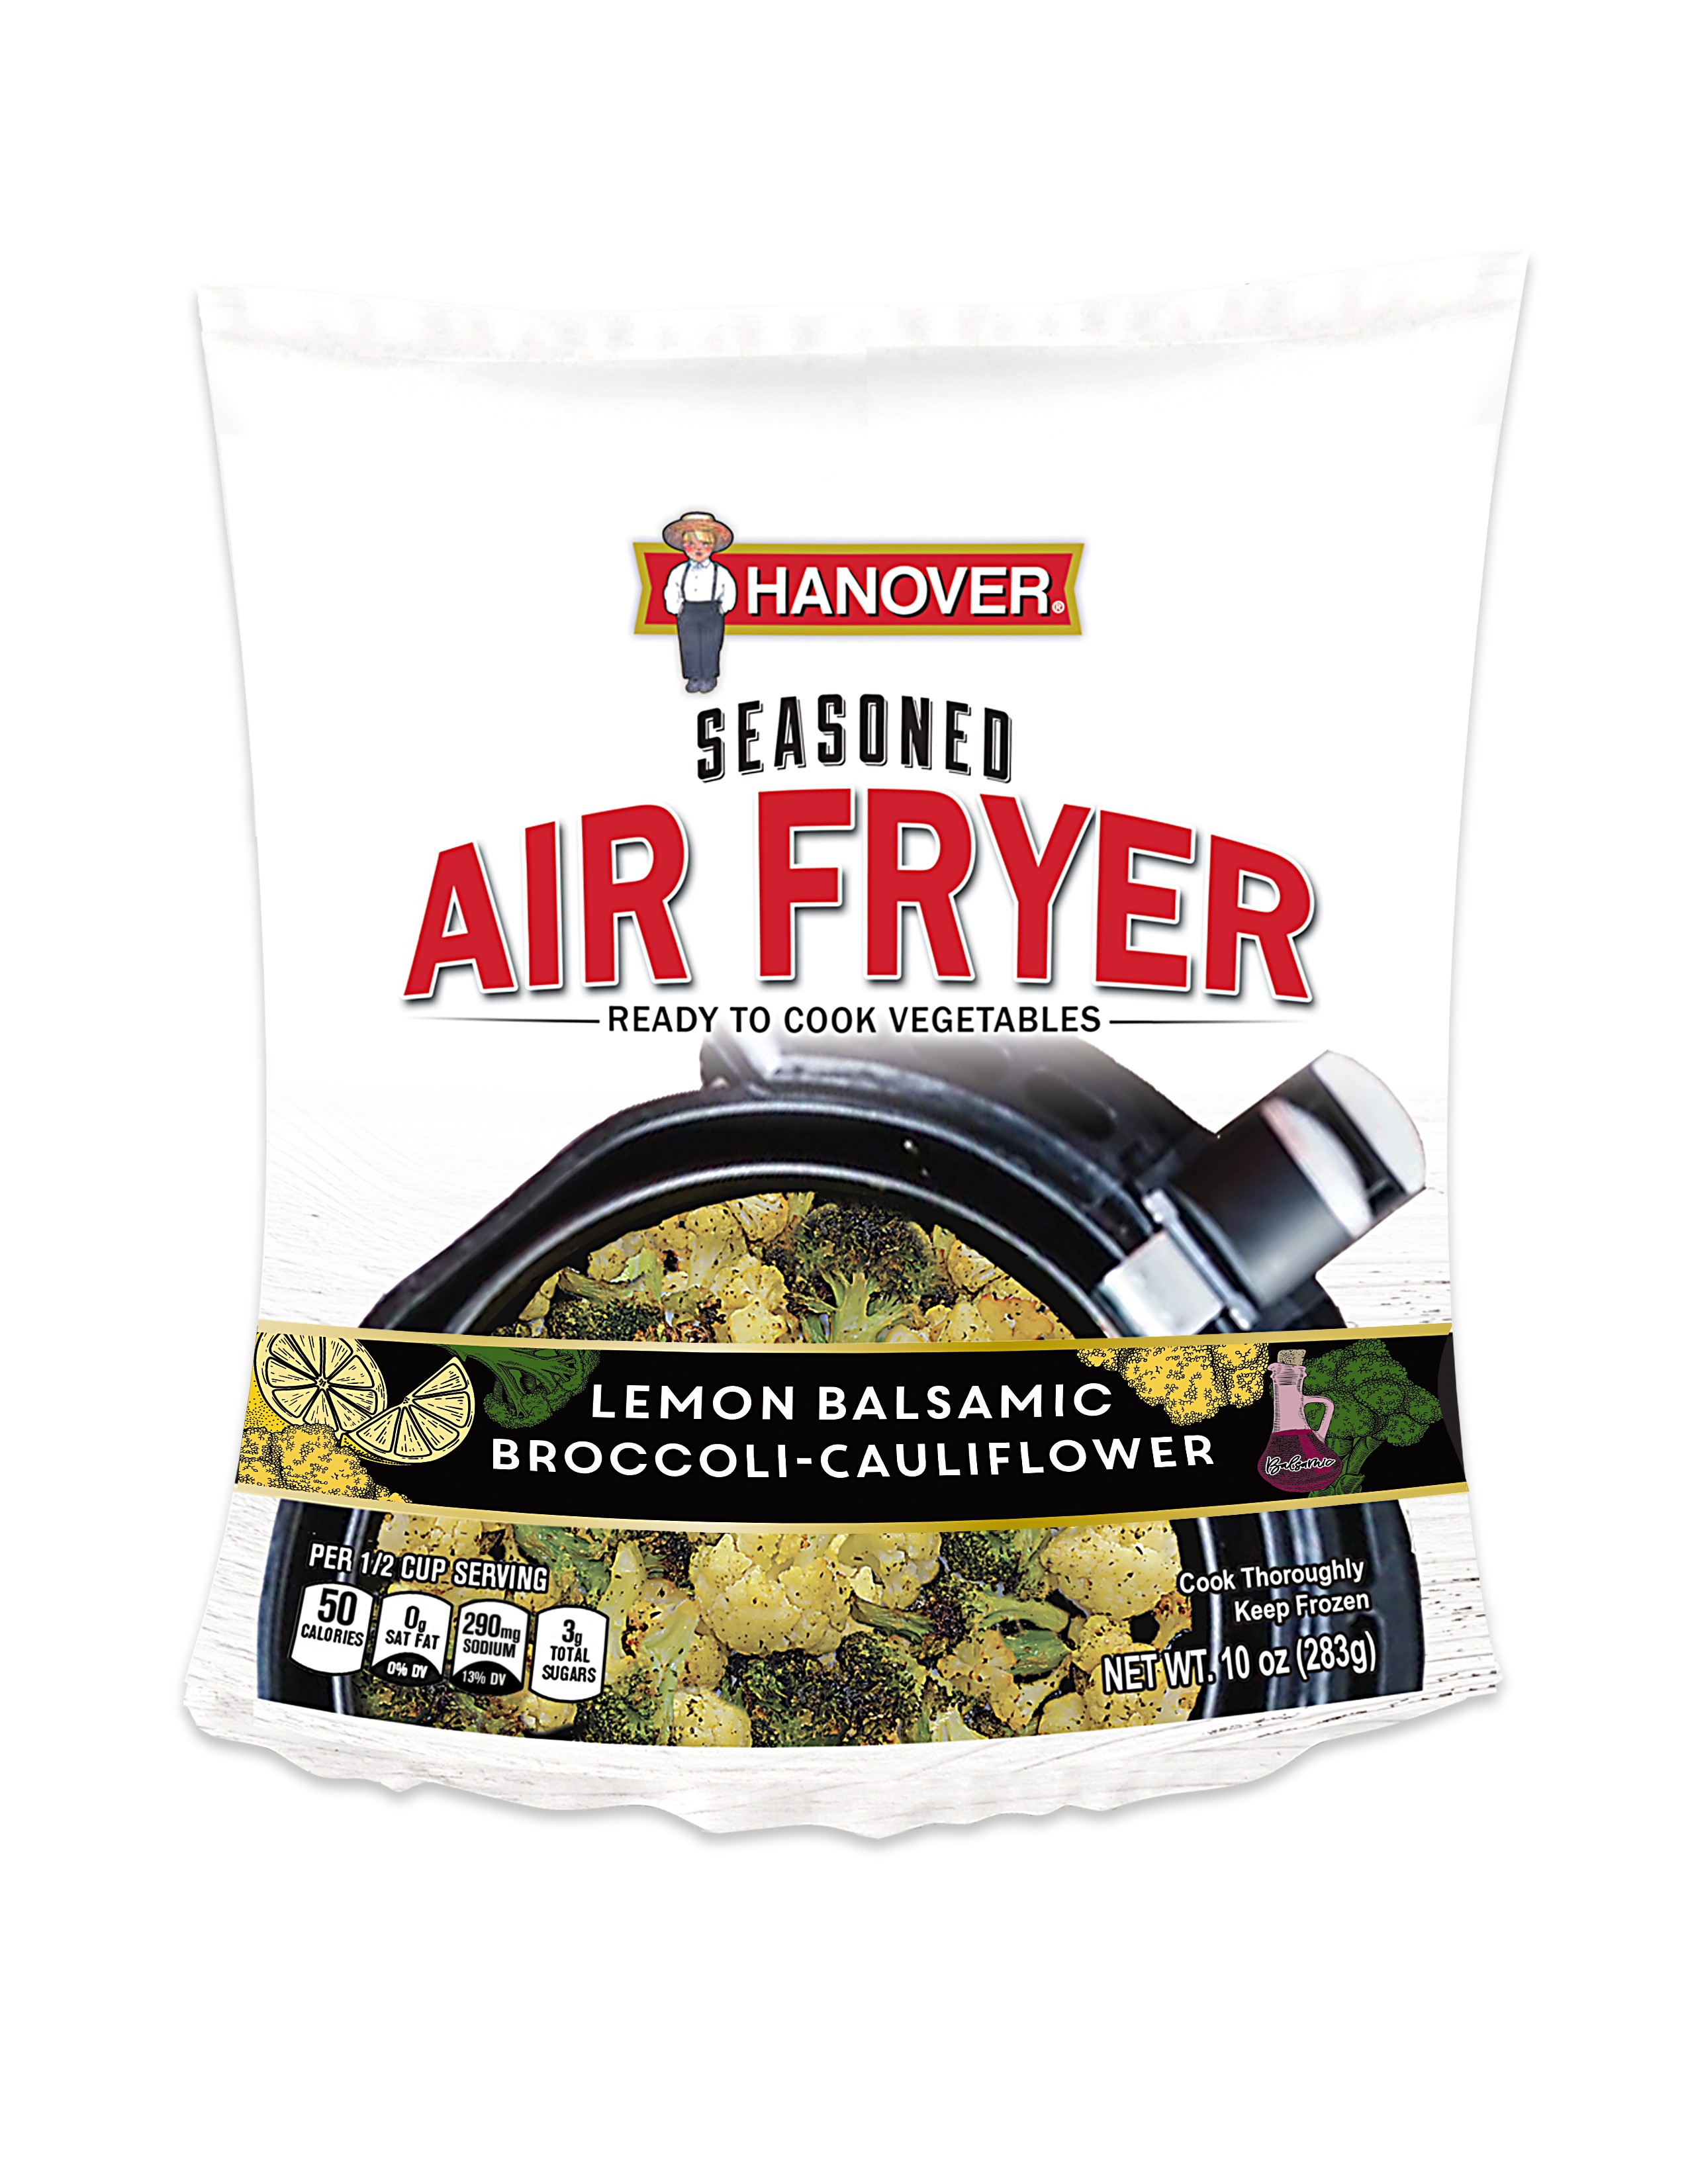 LB Broccoli Cauliflower | Hanover Foods